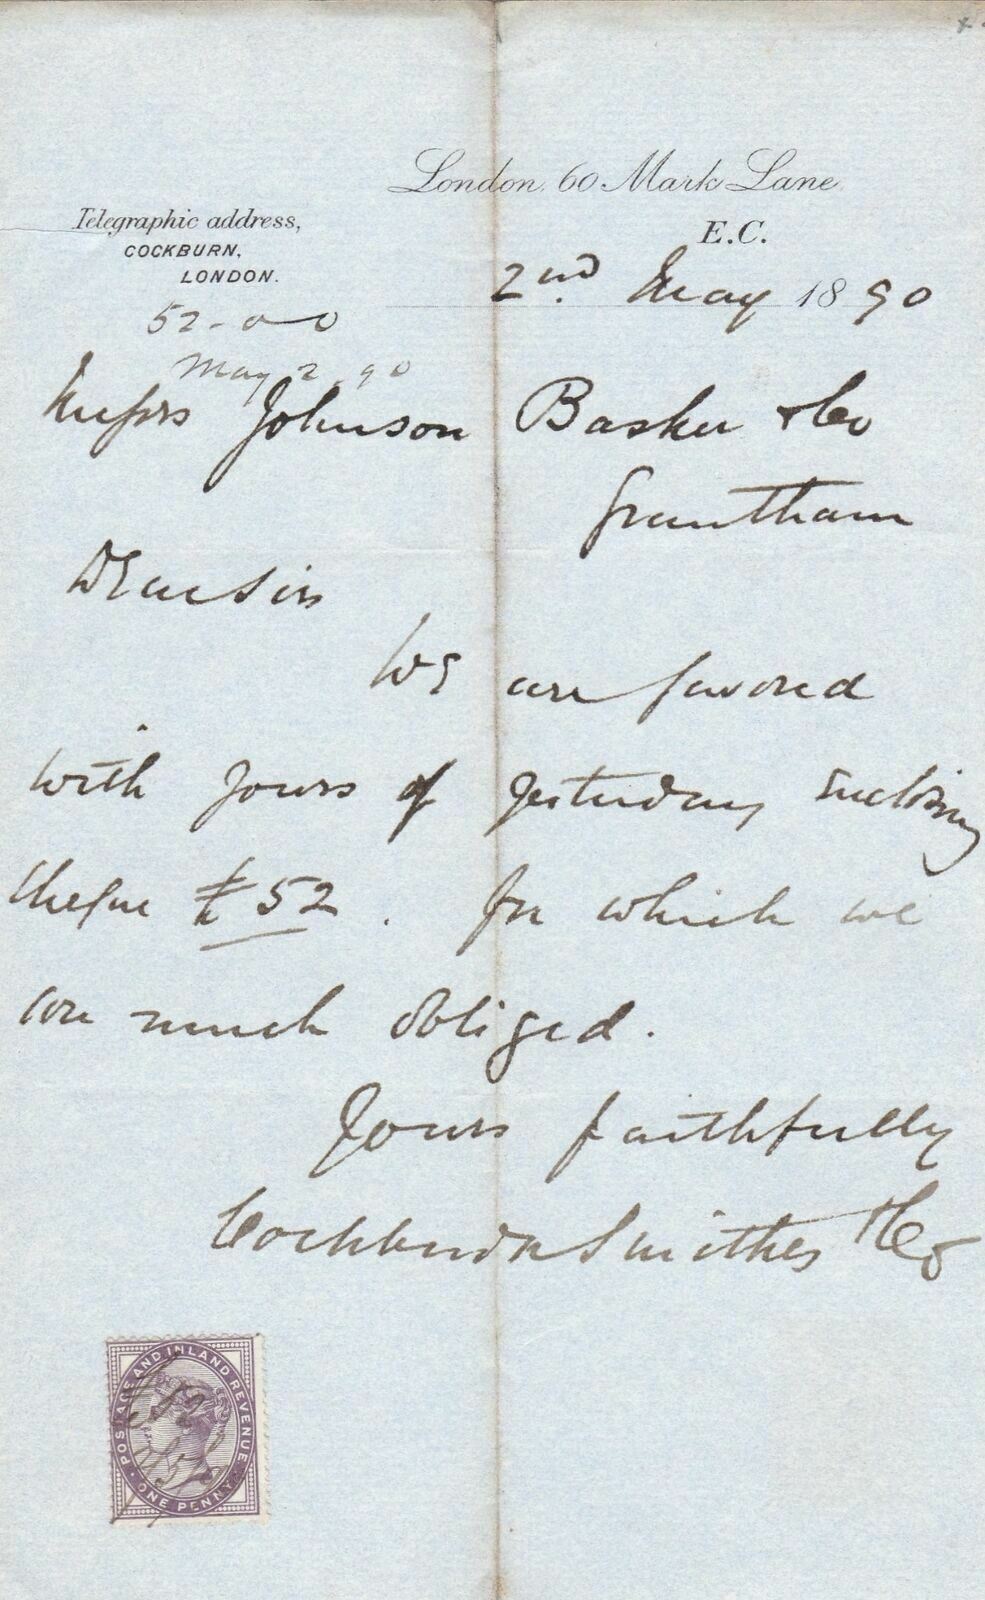 COCKBURN, MARK LANE, LONDON 1890 Johnson Basker&Co Alcohol Stamp Receipt   46873